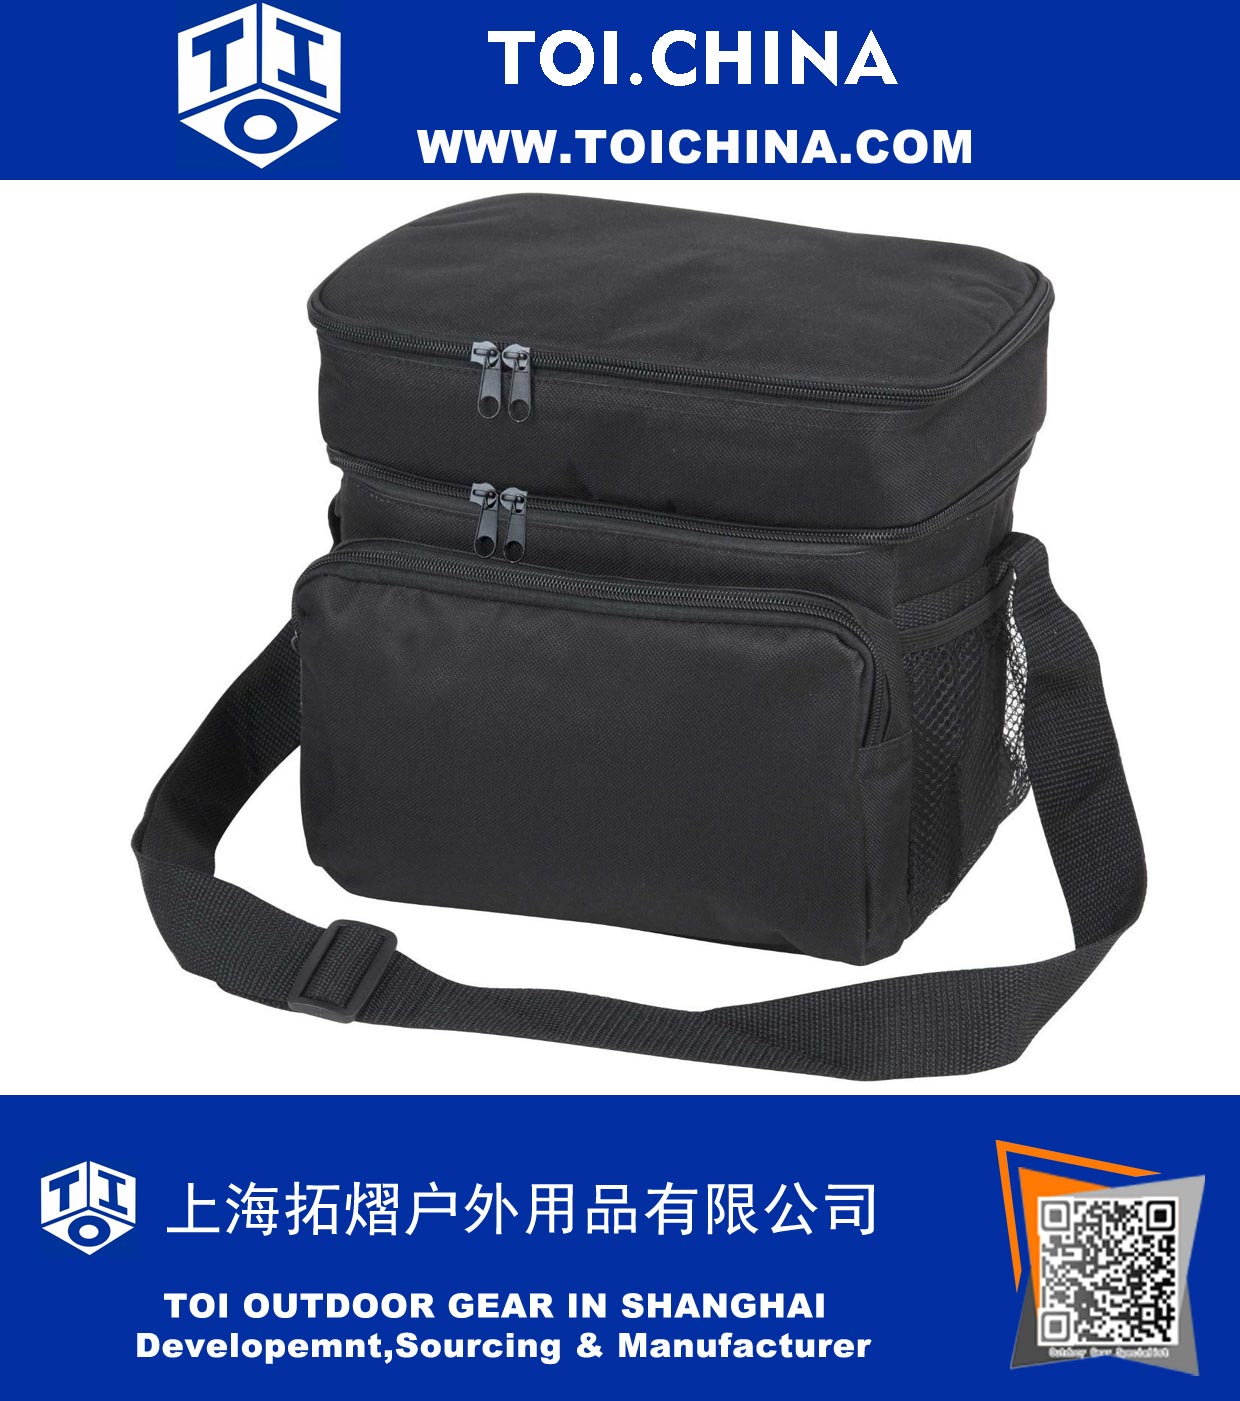 Deluxe Cooler Lunchbox, Lunch Bag, 8-Kanister, isoliert mit Tragegriff-Schultergurt